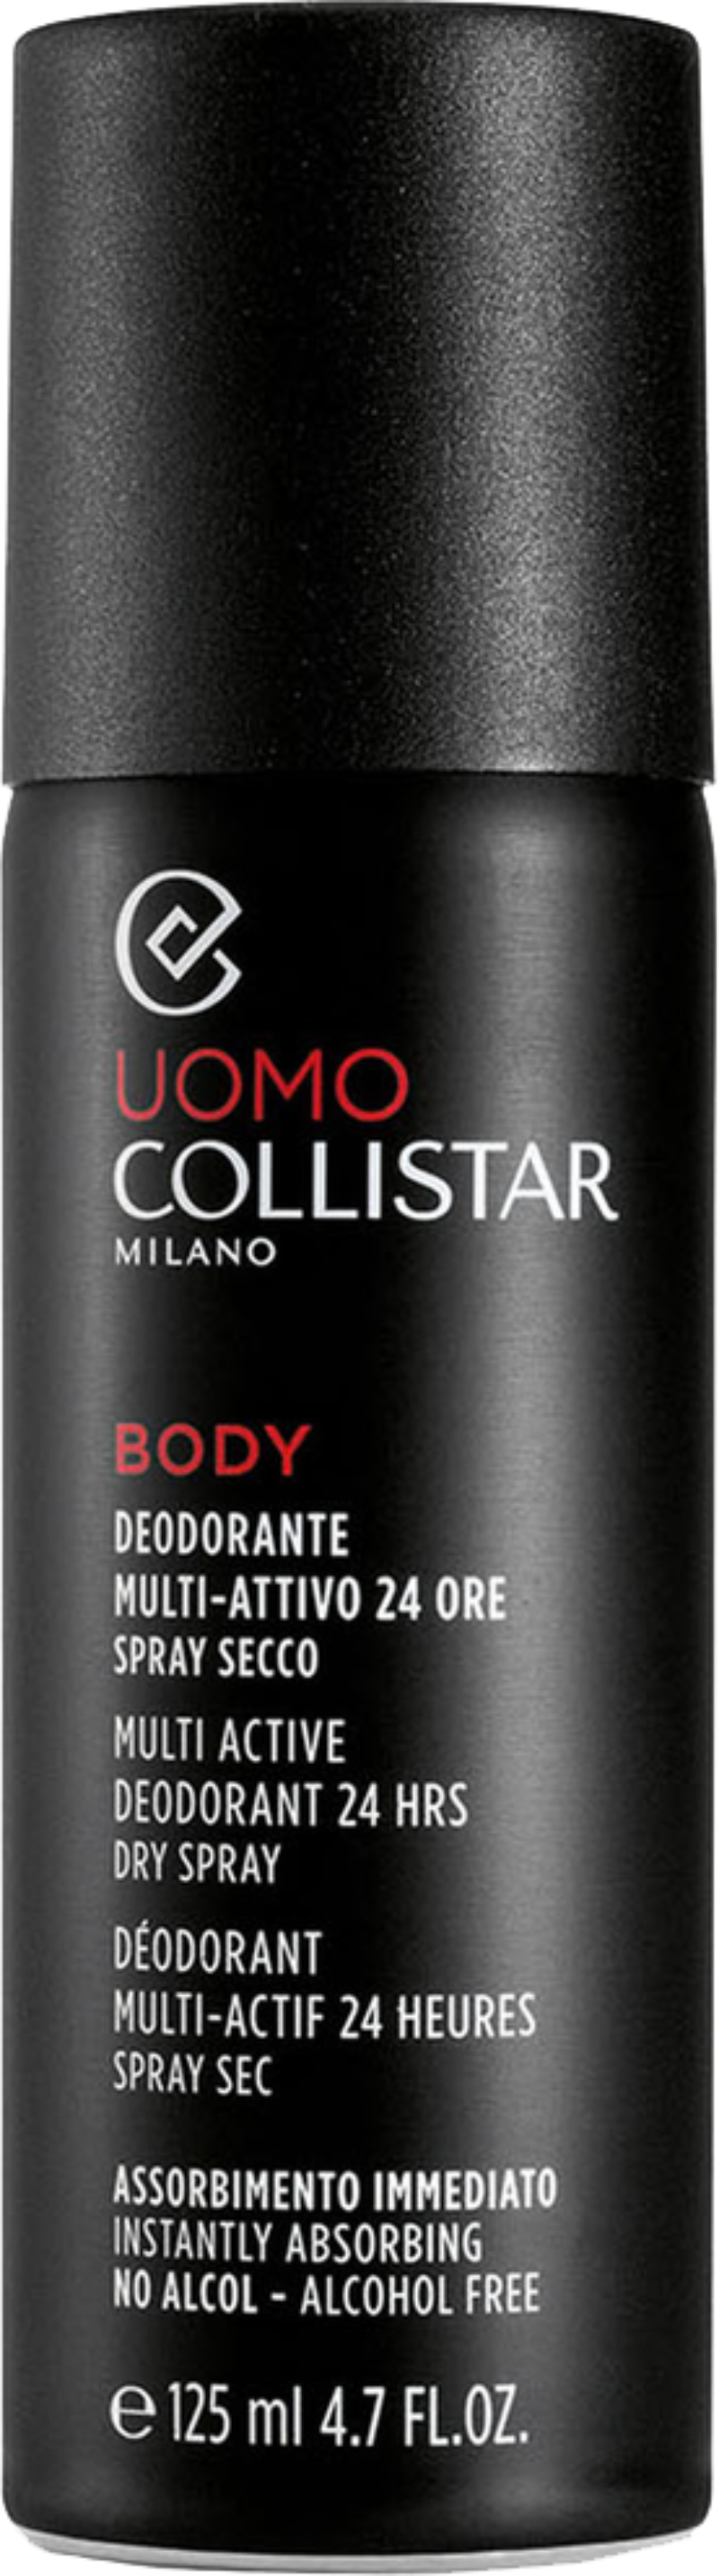 Collistar - Men Multi-Active 24h Spray Deodorant 125 ml